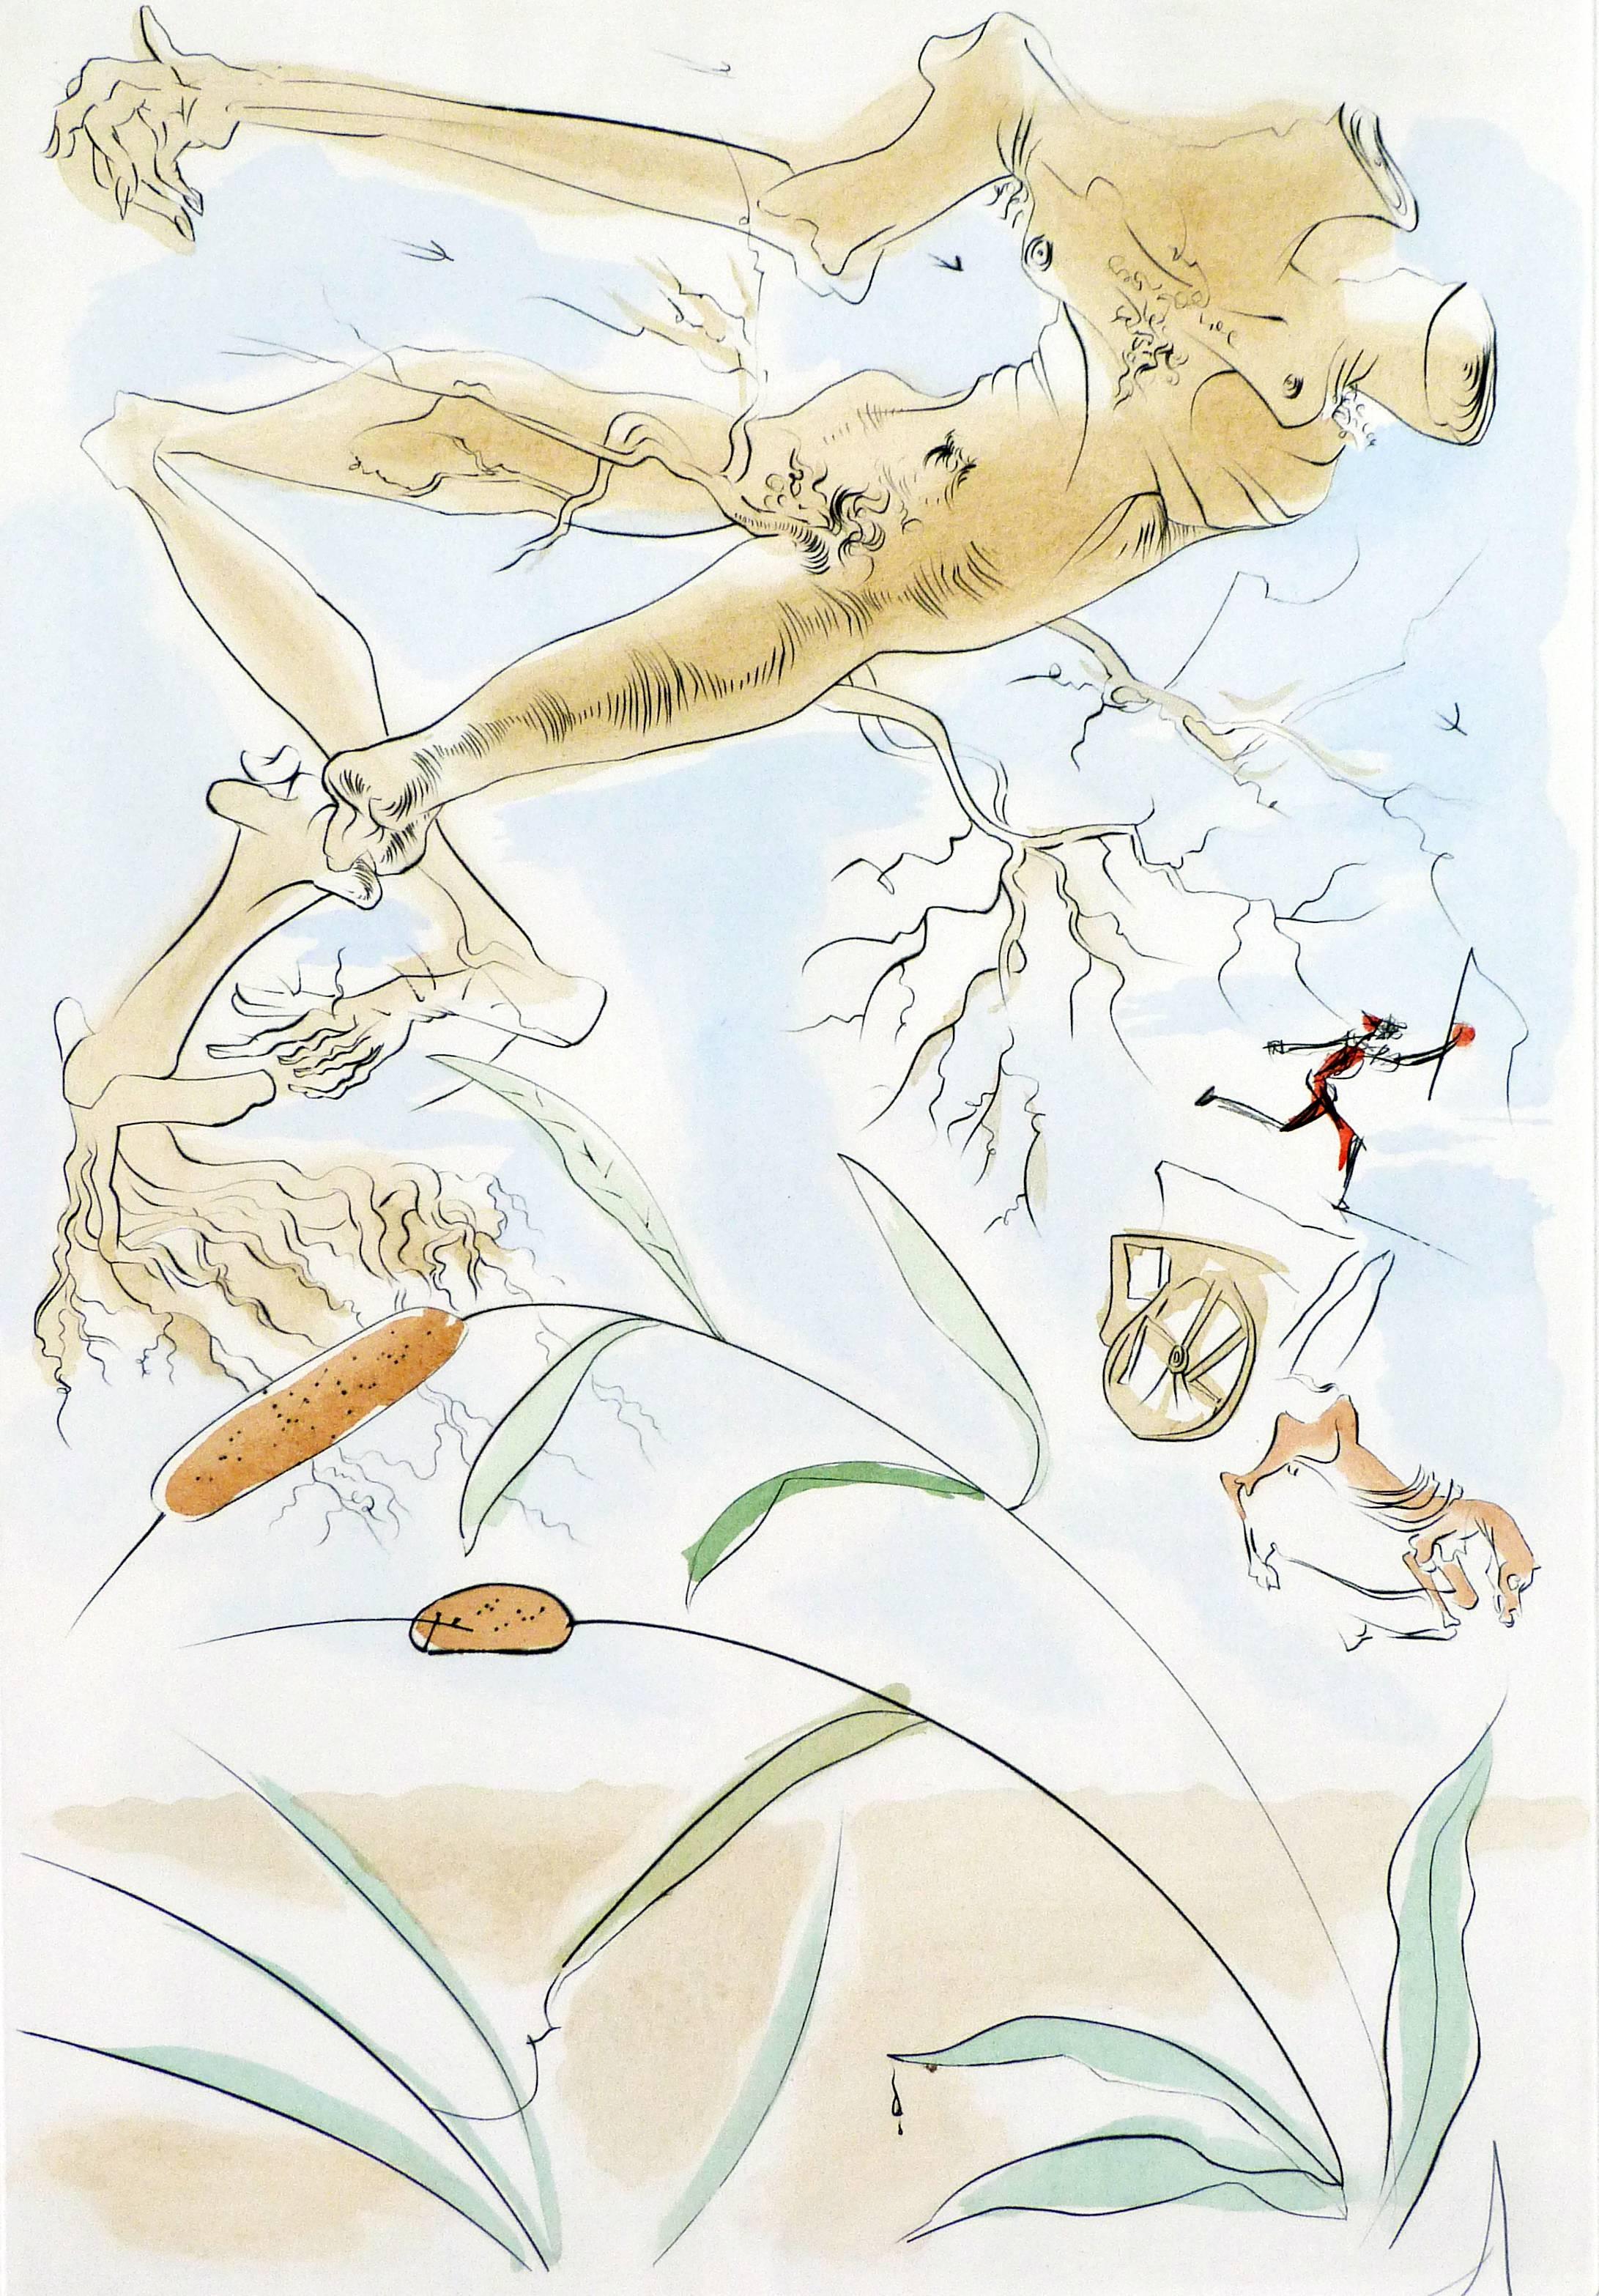 Salvador Dalí Abstract Print - Surrealist Composition